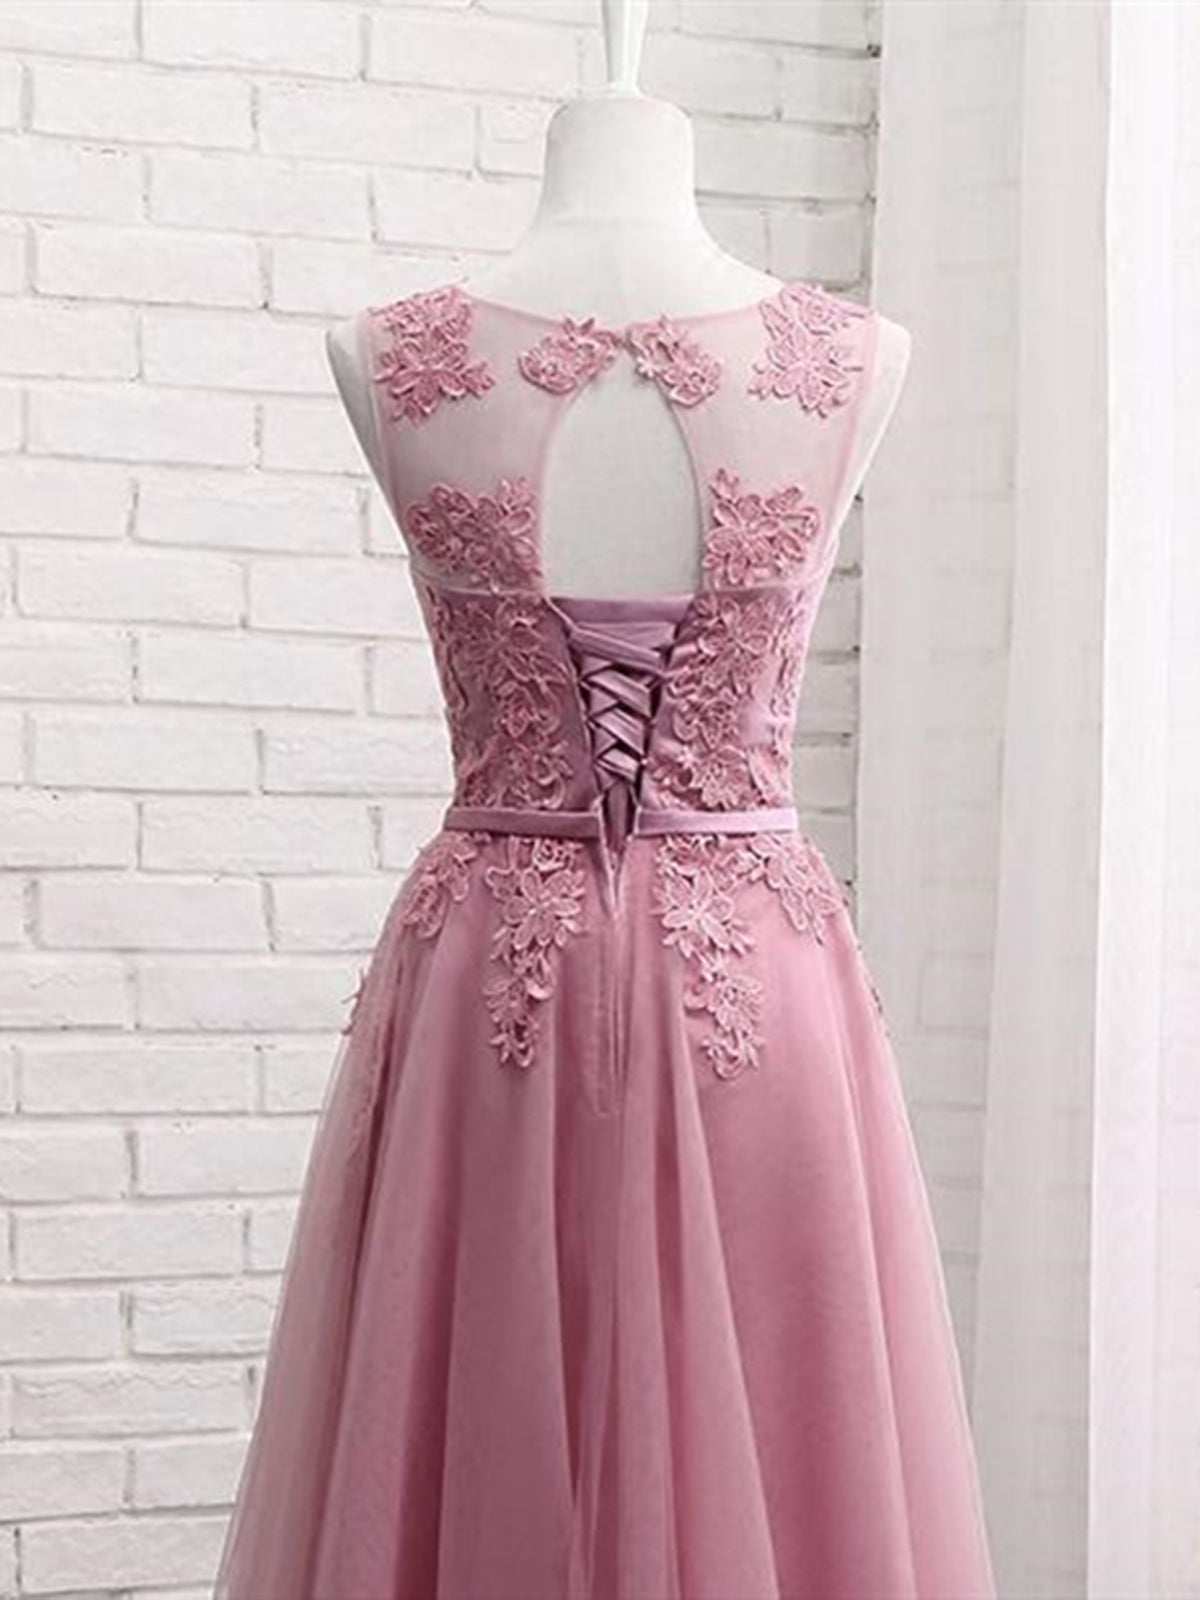 Beauty Dress Design, Short Pink Lace Prom Dresses, Short Pink Lace Graduation Homecoming Dresses